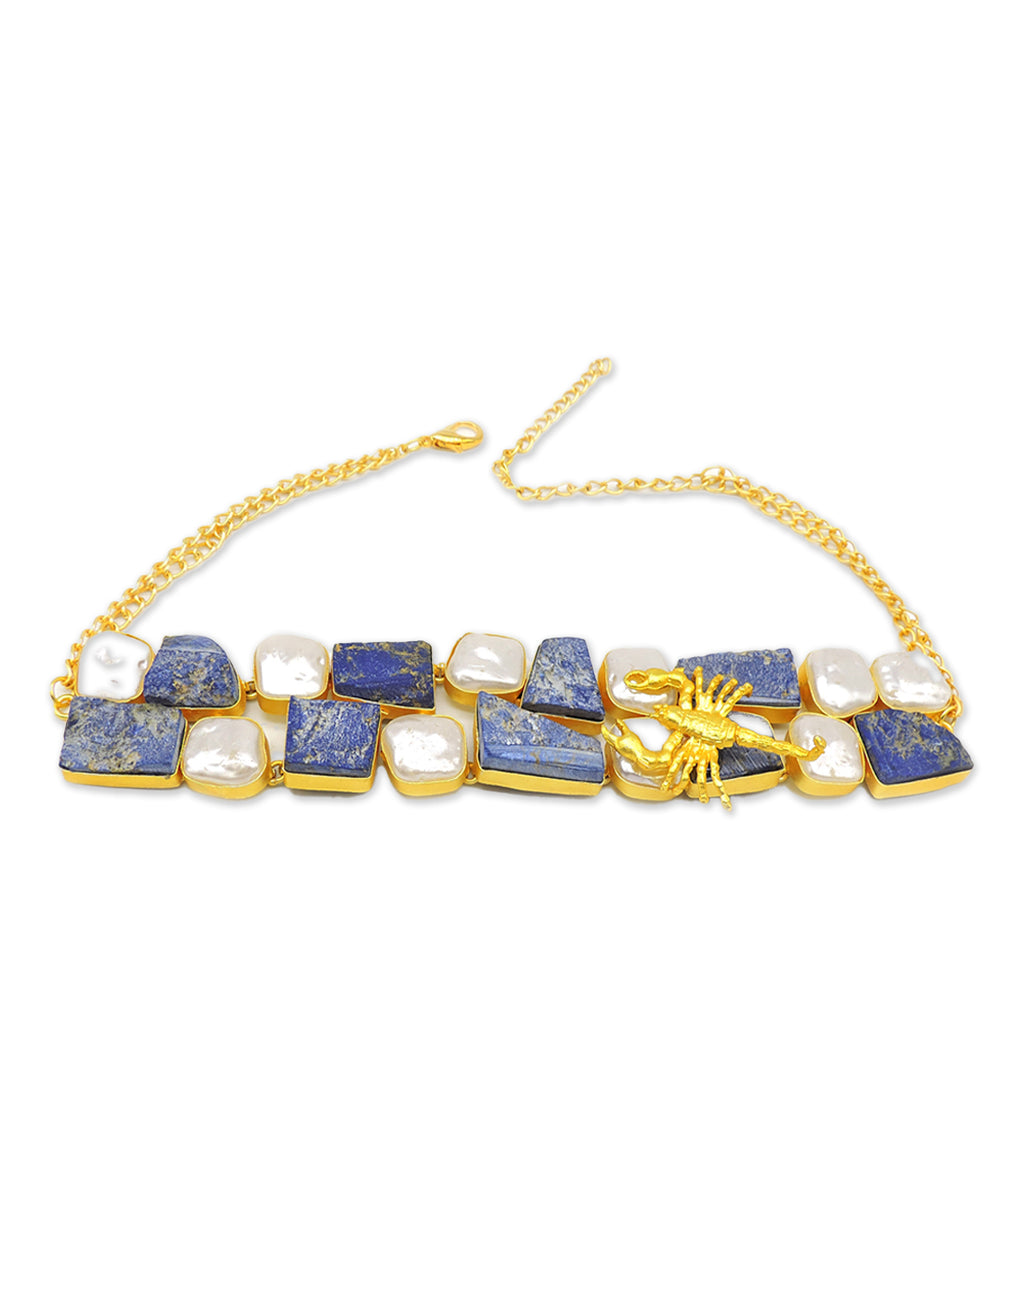 Scorpion Haati Necklace - Statement Necklaces - Gold-Plated & Hypoallergenic Jewellery - Made in India - Dubai Jewellery - Dori